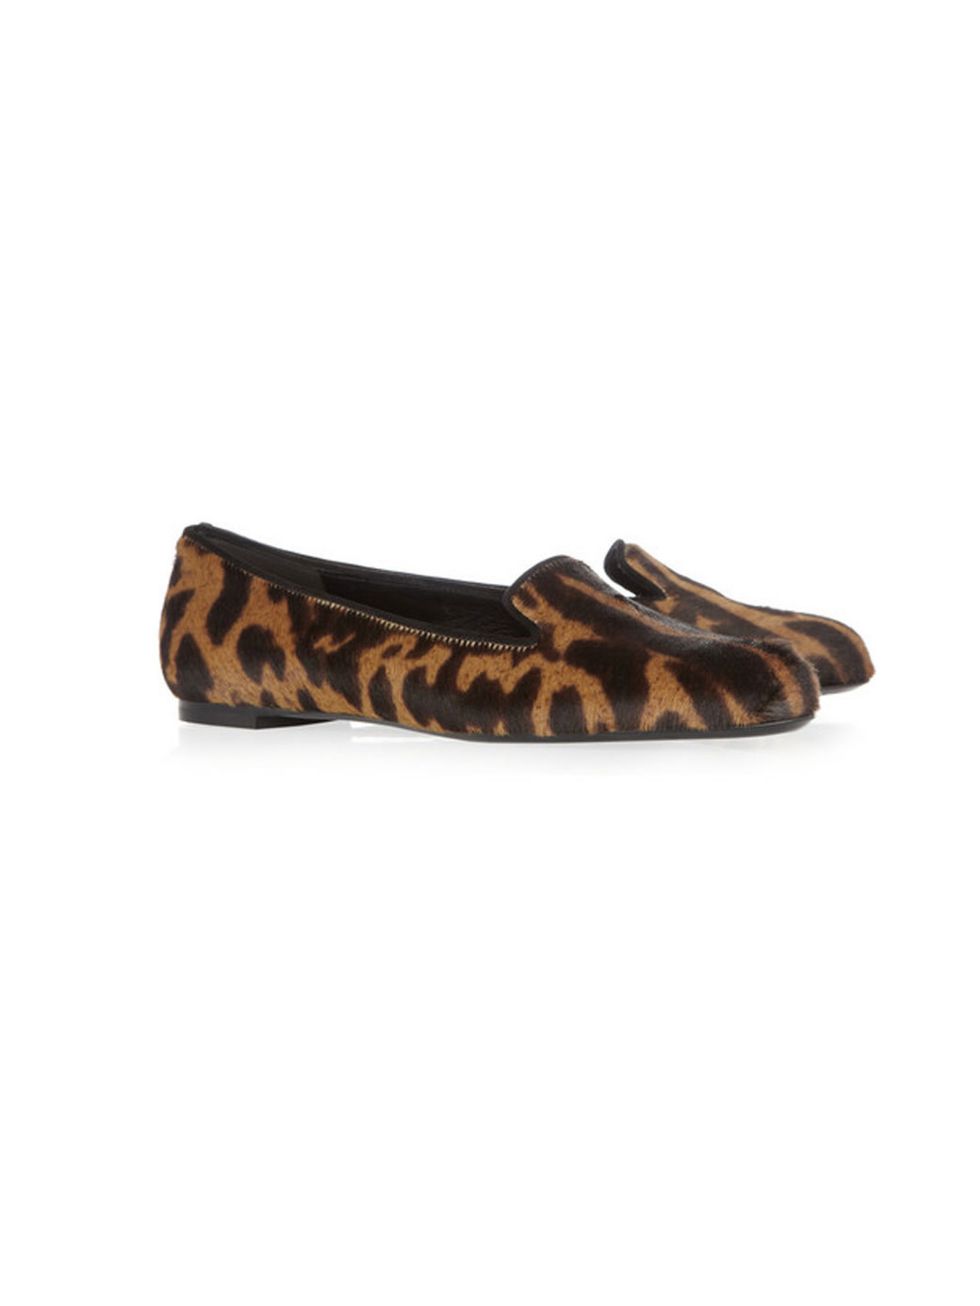 <p>Alexander McQueen leopard print loafers, £515, at Net-a-Porter</p><p><a href="http://shopping.elleuk.com/browse?fts=alexander+mcqueen+leopard+print+loafers">BUY NOW</a></p>